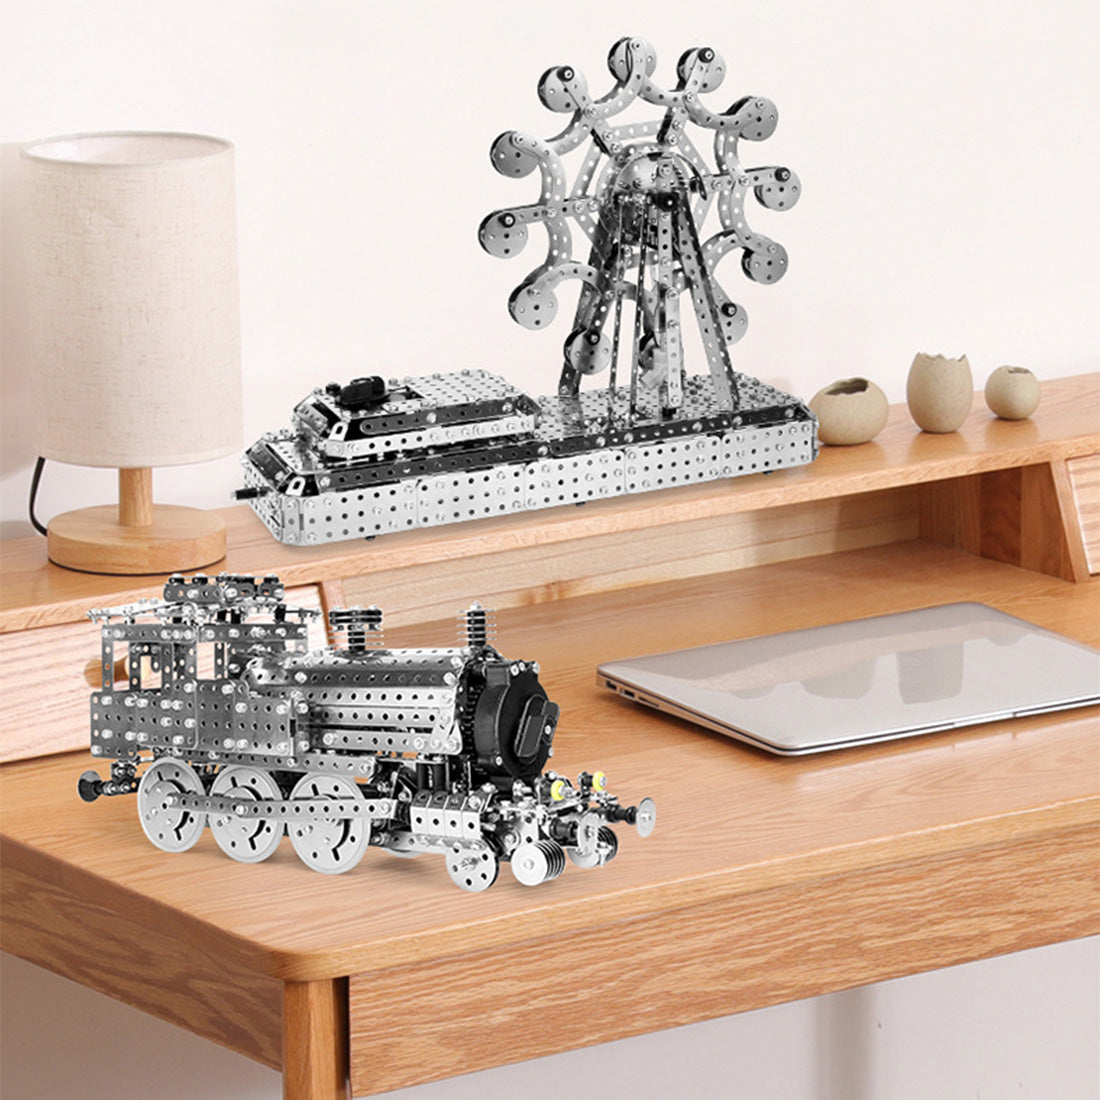 1370PCS+ Metal Clockwork-driven Locomotive DIY Model Toys